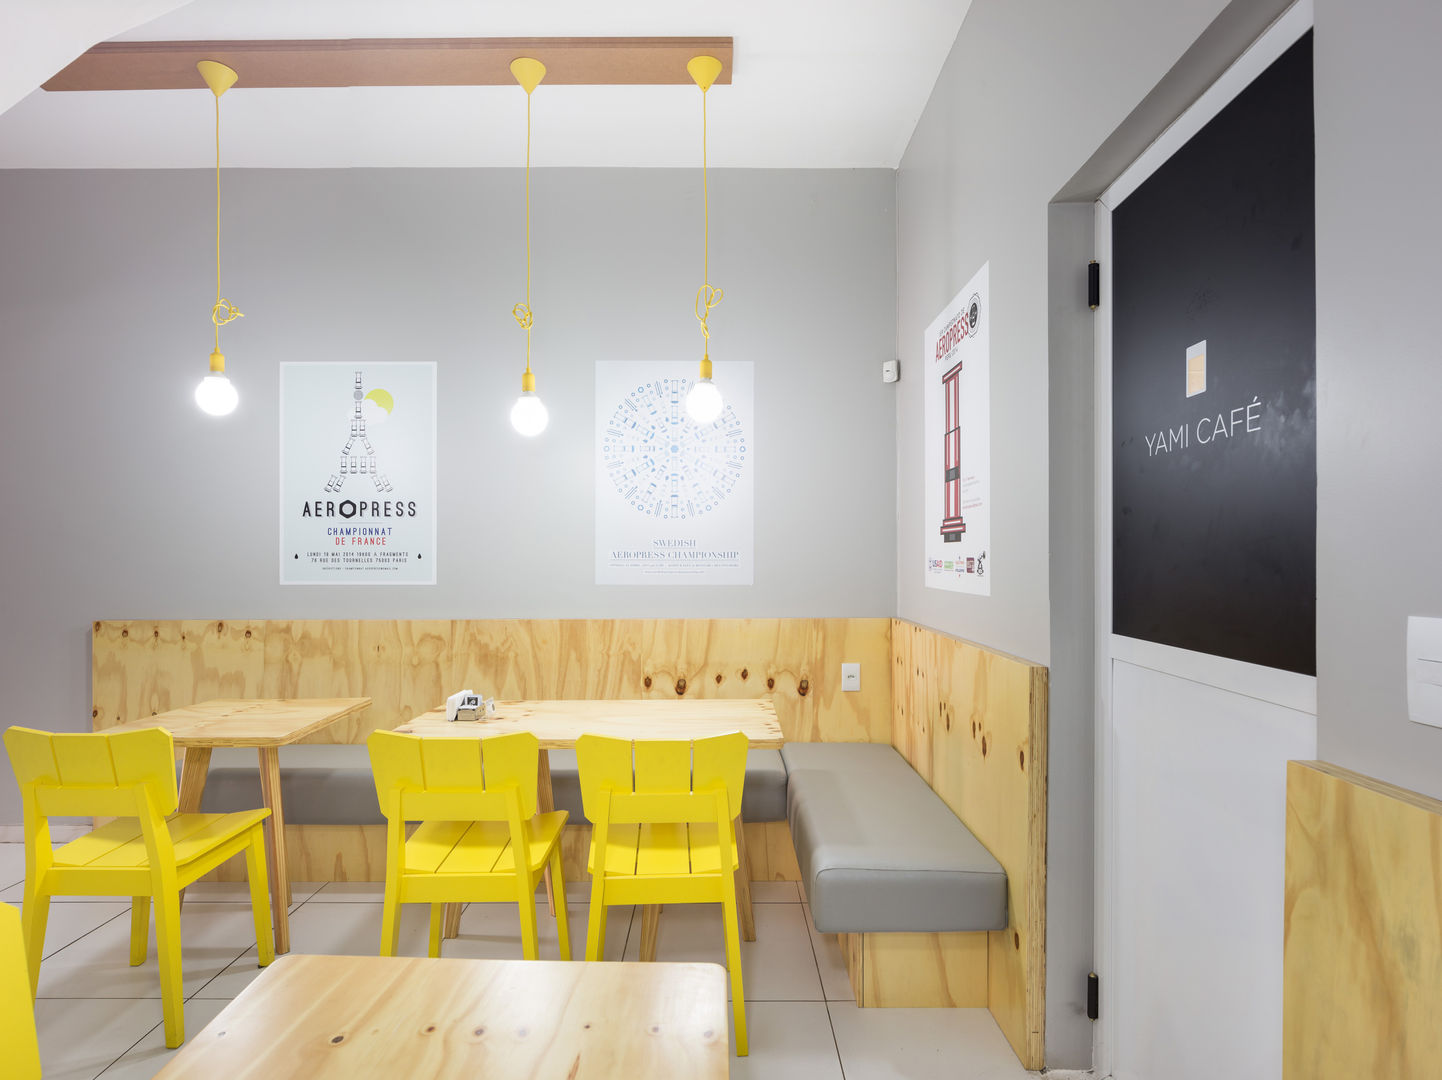 Restaurante - 2014 - Yami Café, Kali Arquitetura Kali Arquitetura Commercial spaces Gastronomy